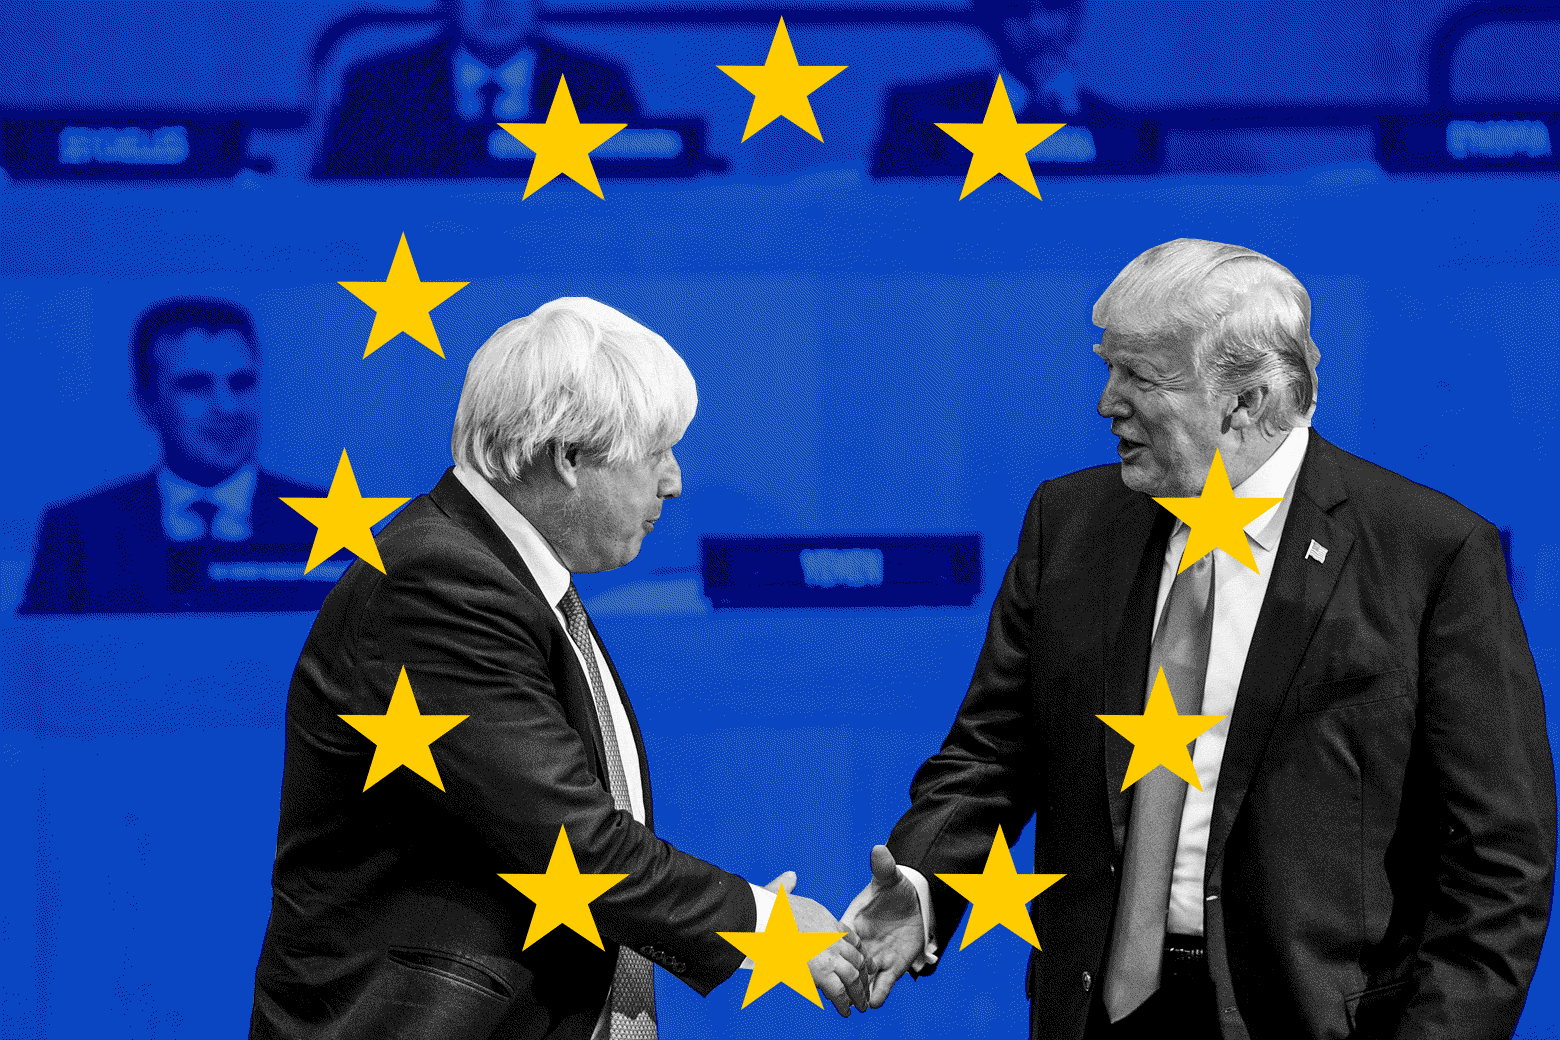 Boris Johnson and Donald Trump shaking hands.